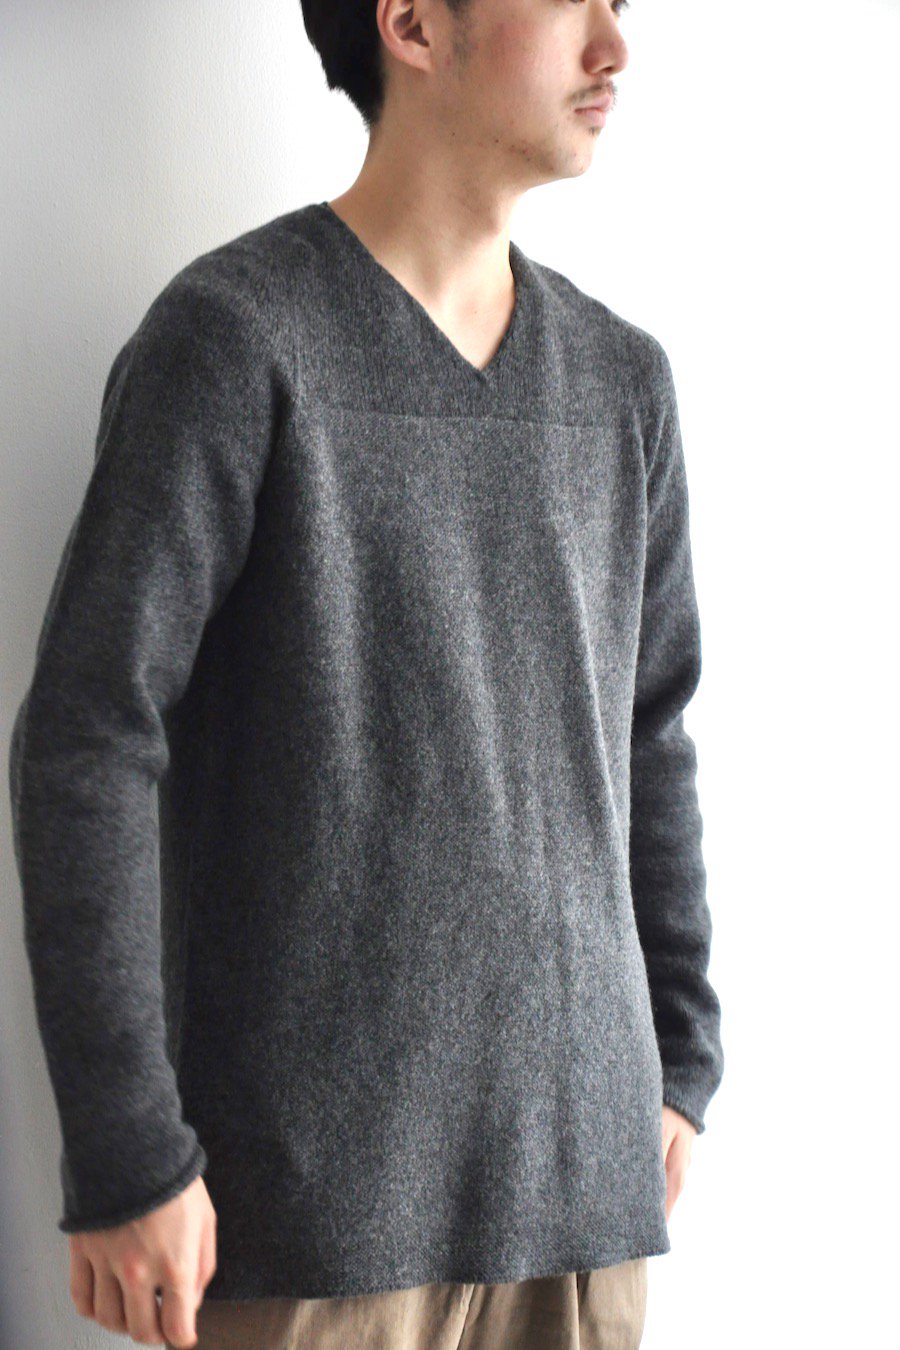 COSMIC WONDER / Tasmanian wool oversized sweater / Dark grey